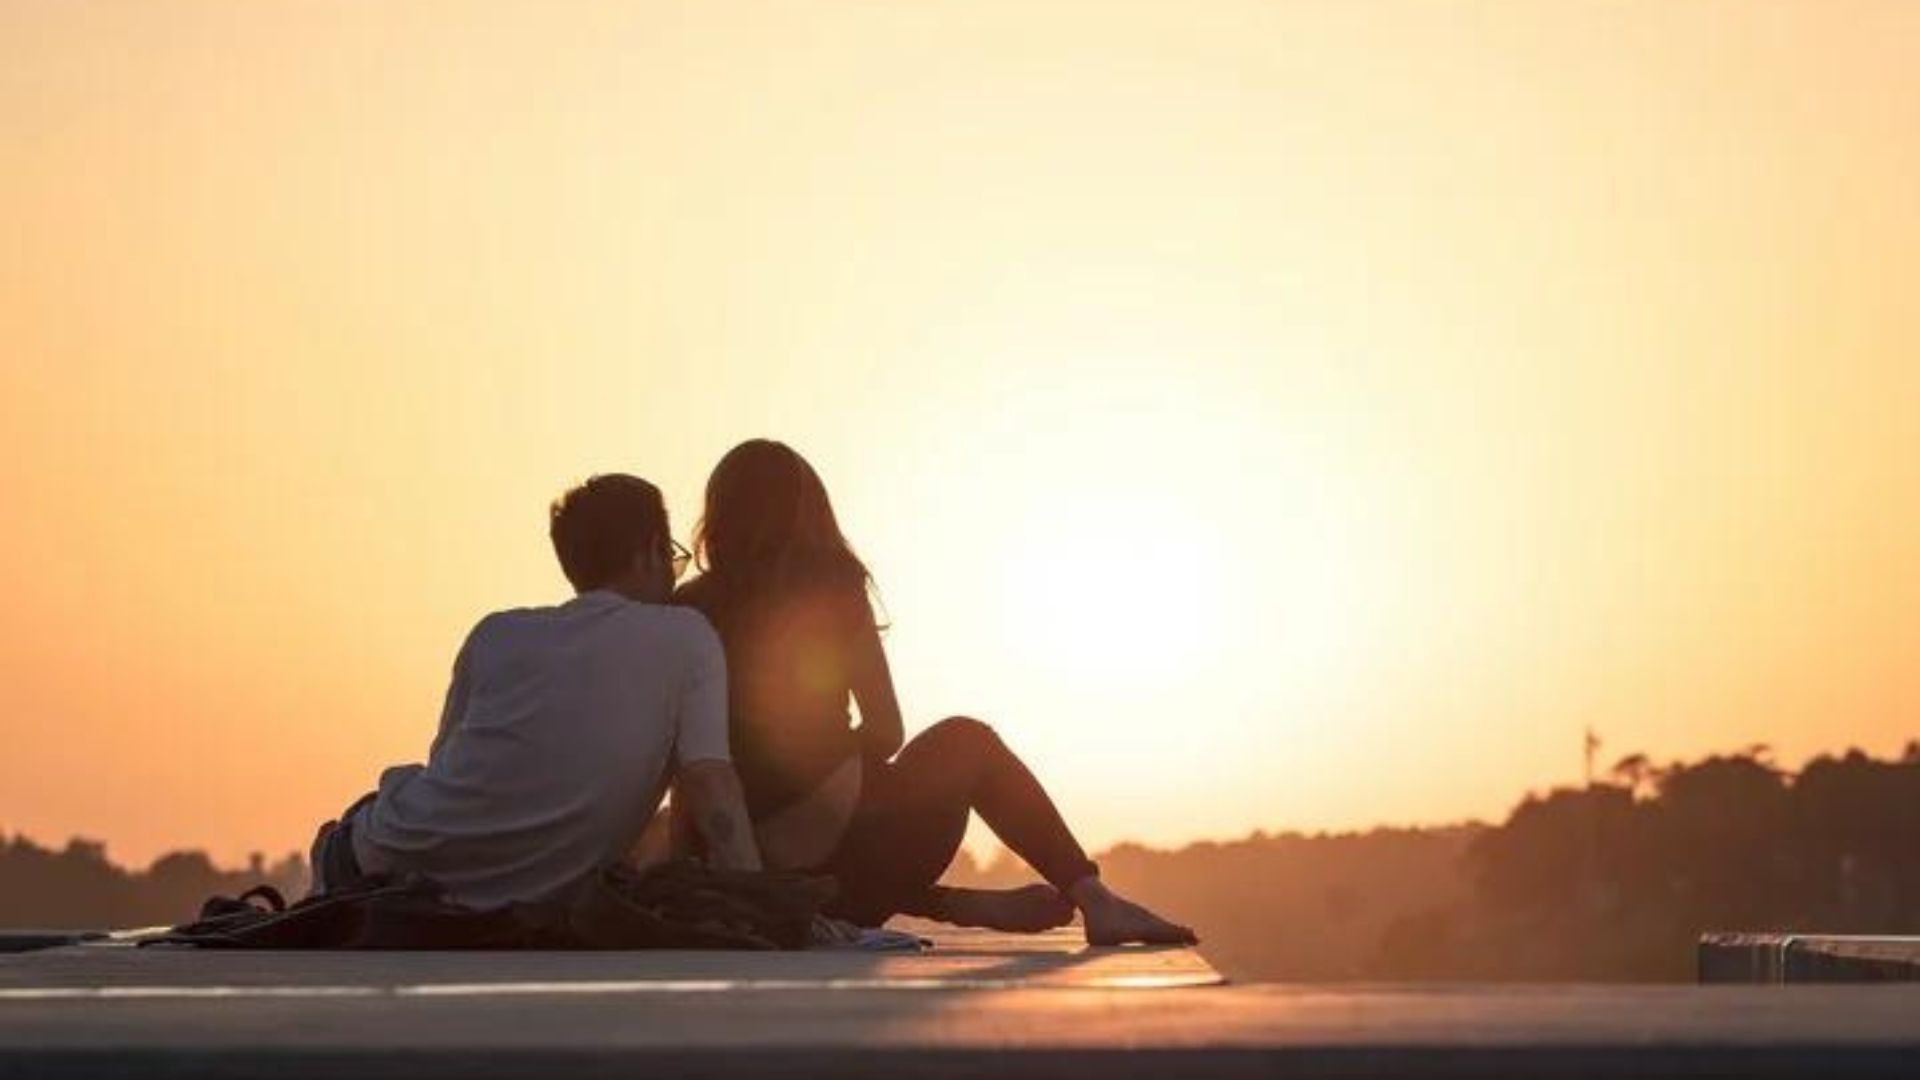 Couple Sitting On A Boardwalk And Enjoying The Sunset